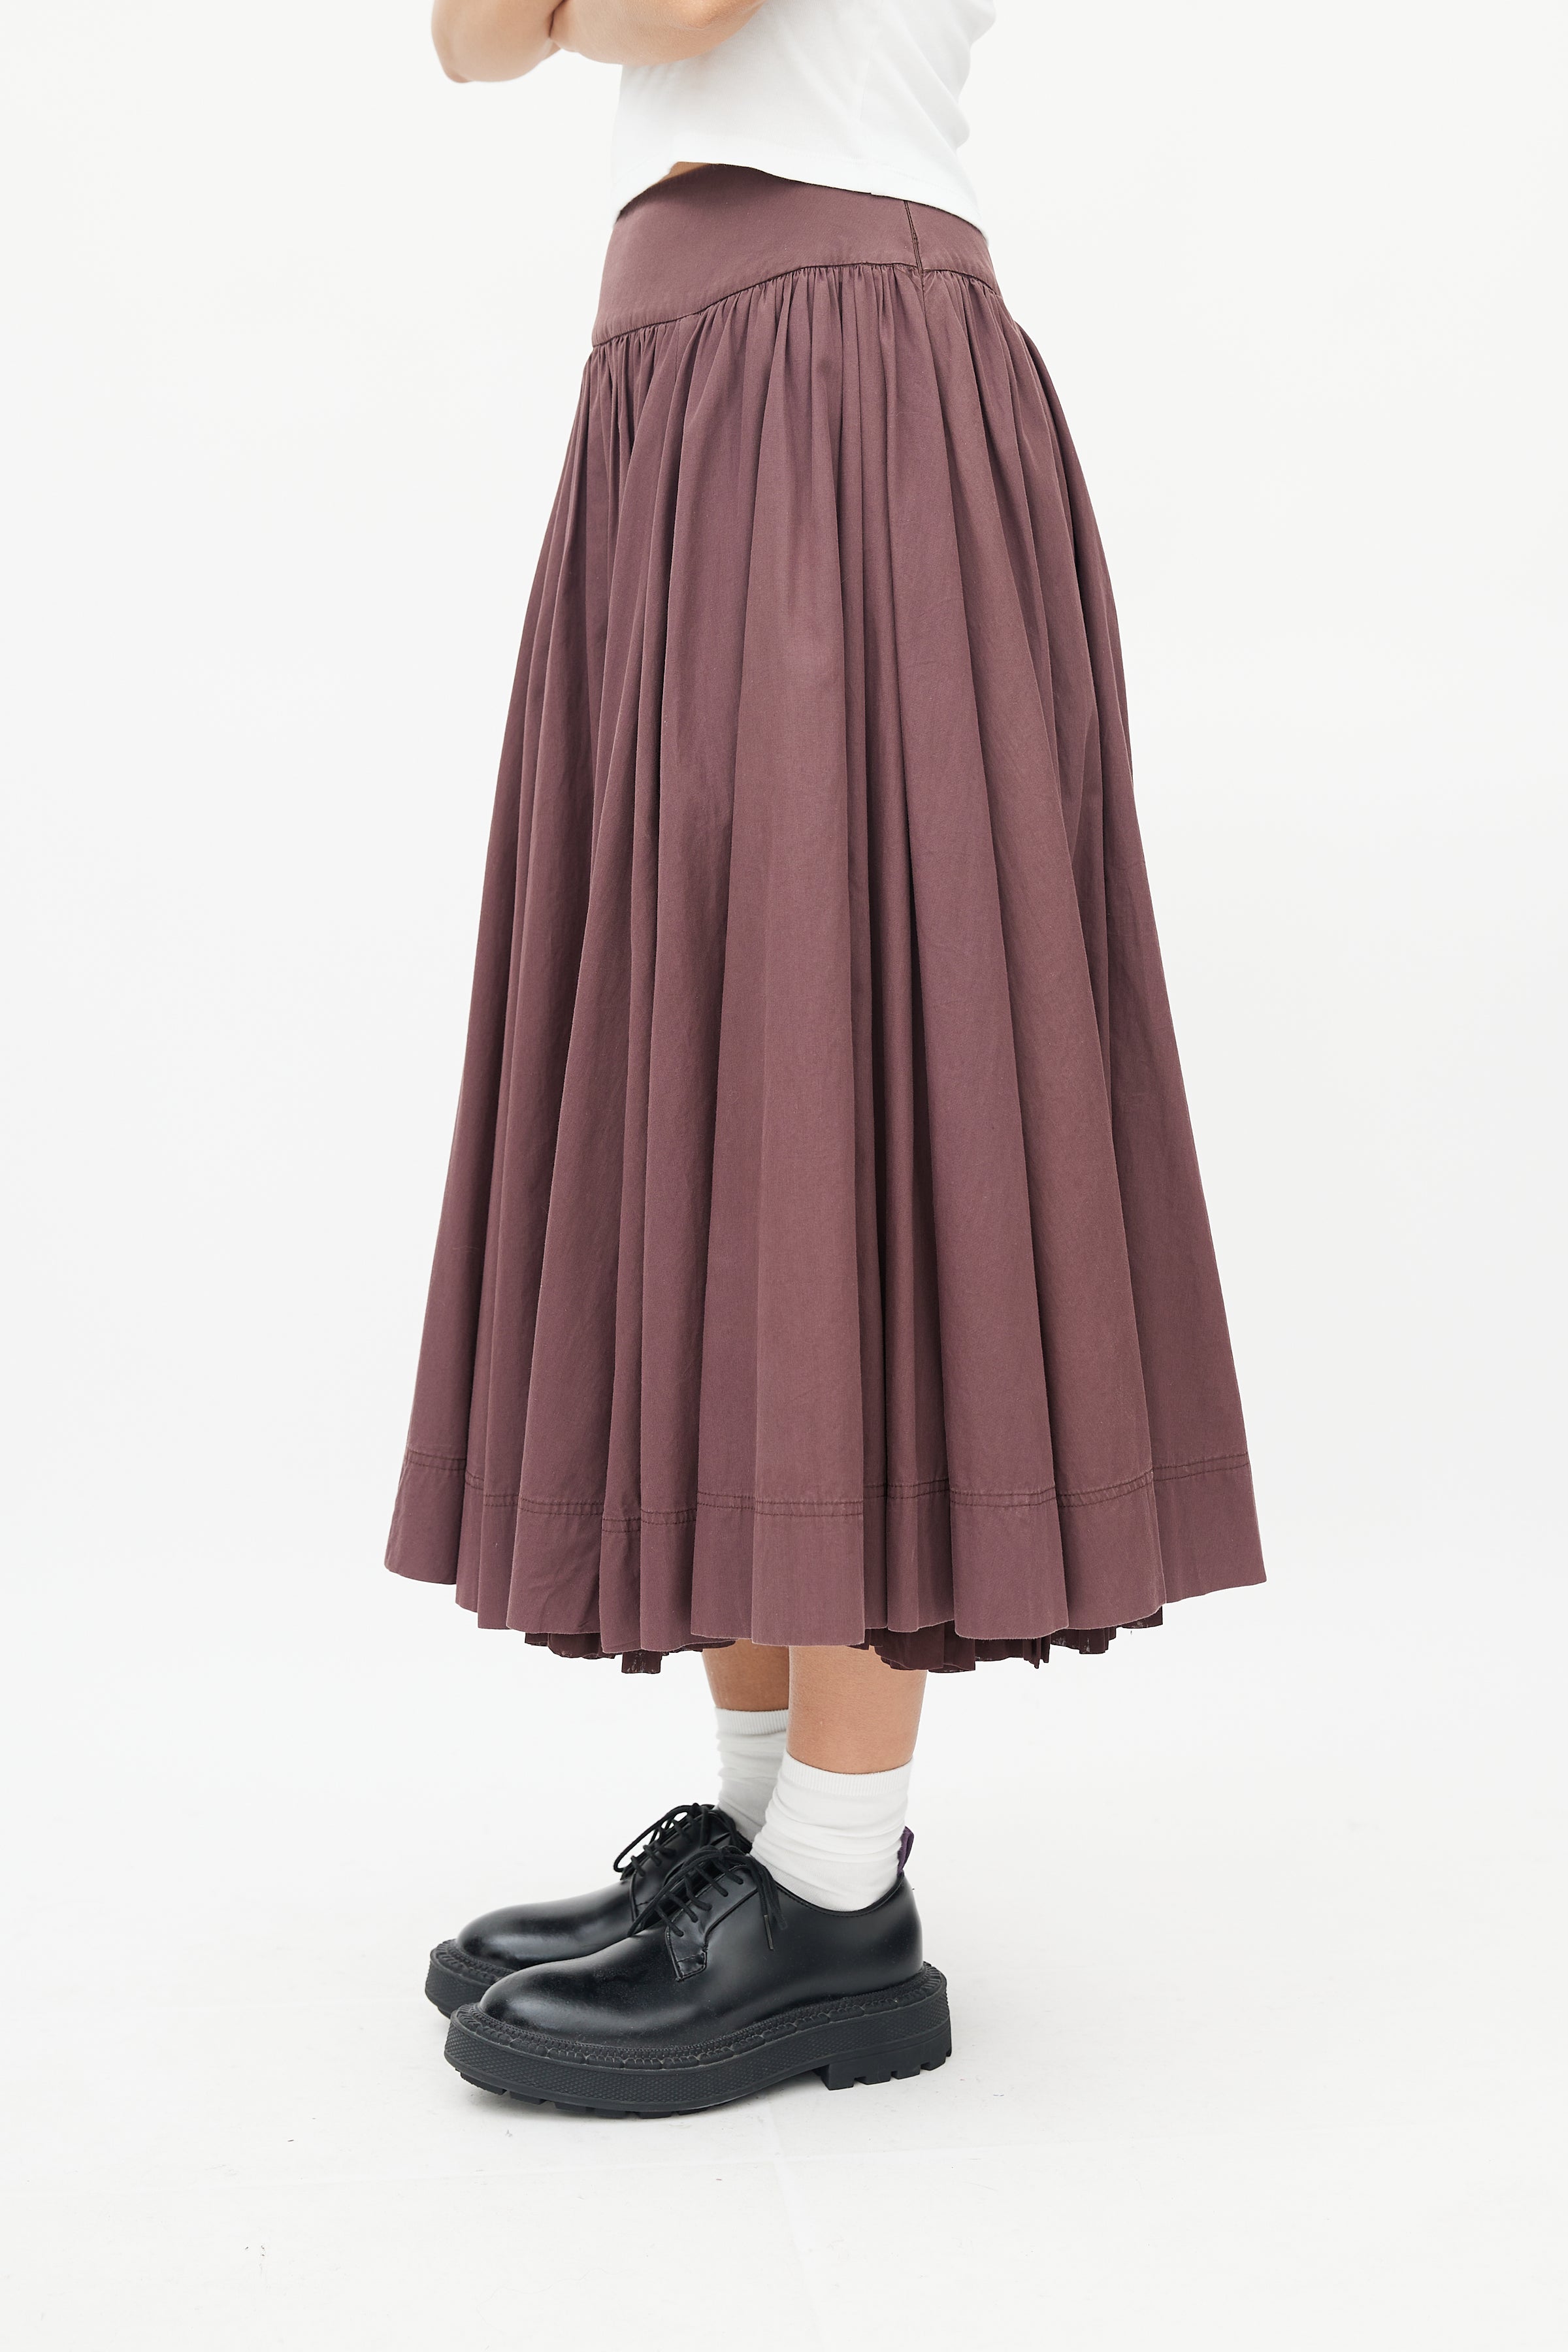 予約販売品】 美品 MIU Skirt Long Jersey 23SS MIU スカート - effie.lk